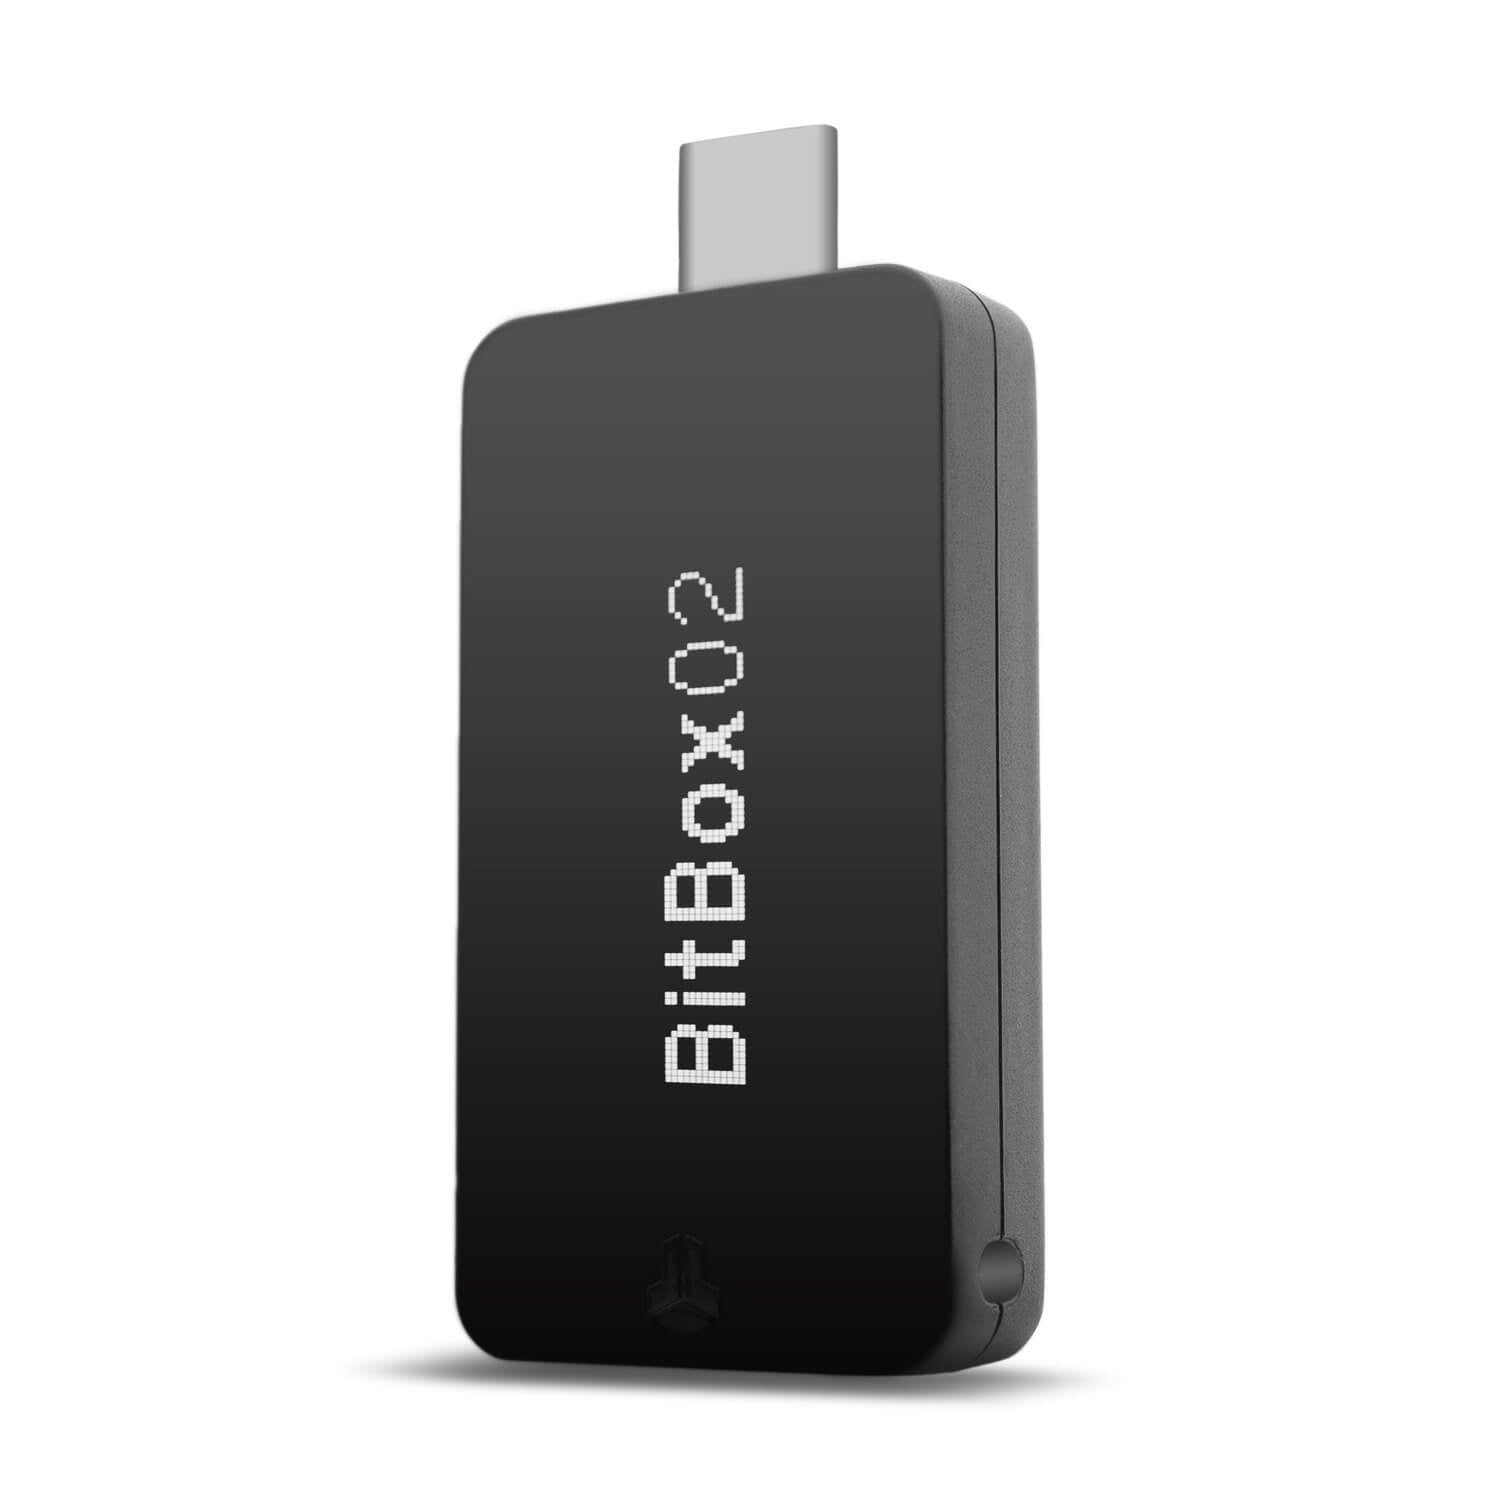 Black BitBox02 crypto hardware wallet standing vertically.